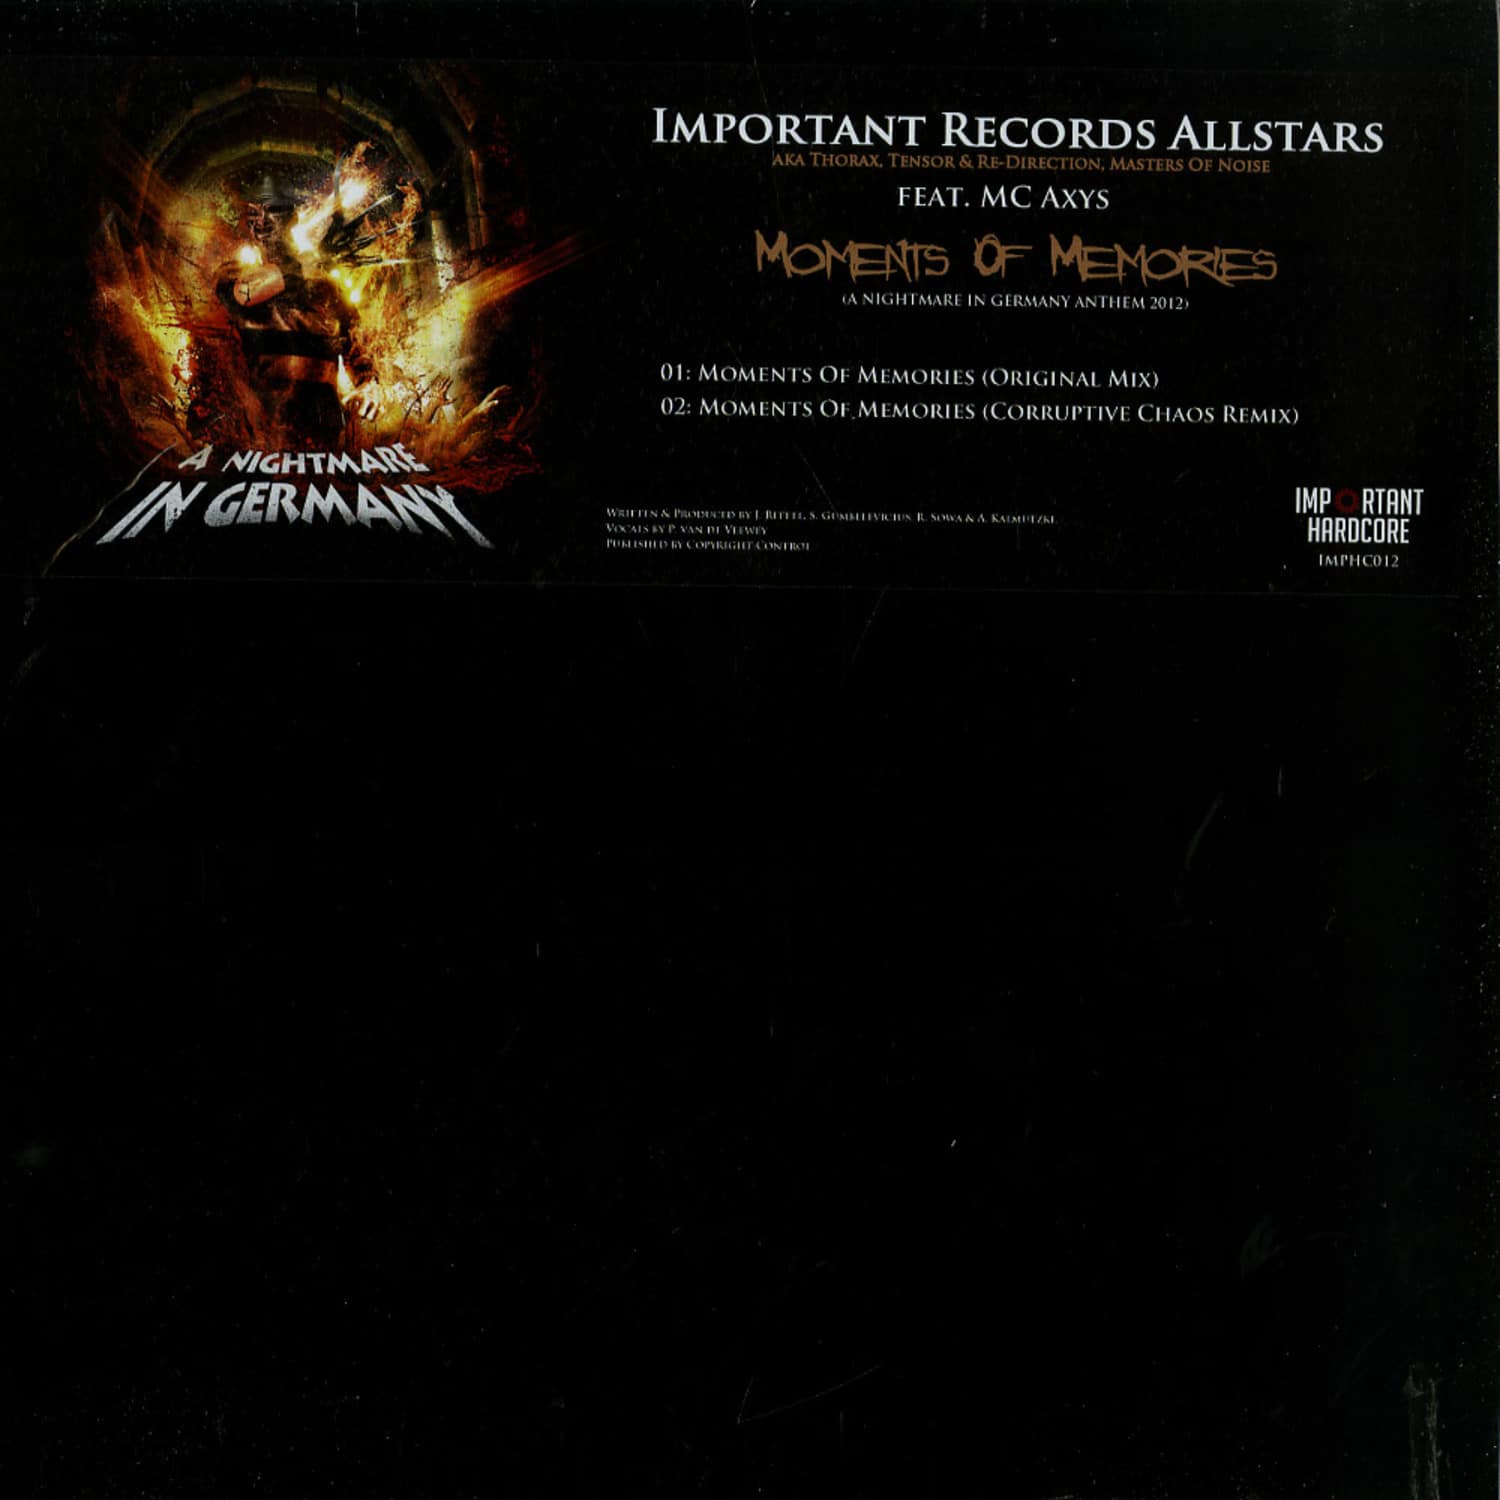 Important Records Allstars ft. Mc Axys - MOMENTS OF MEMORIES